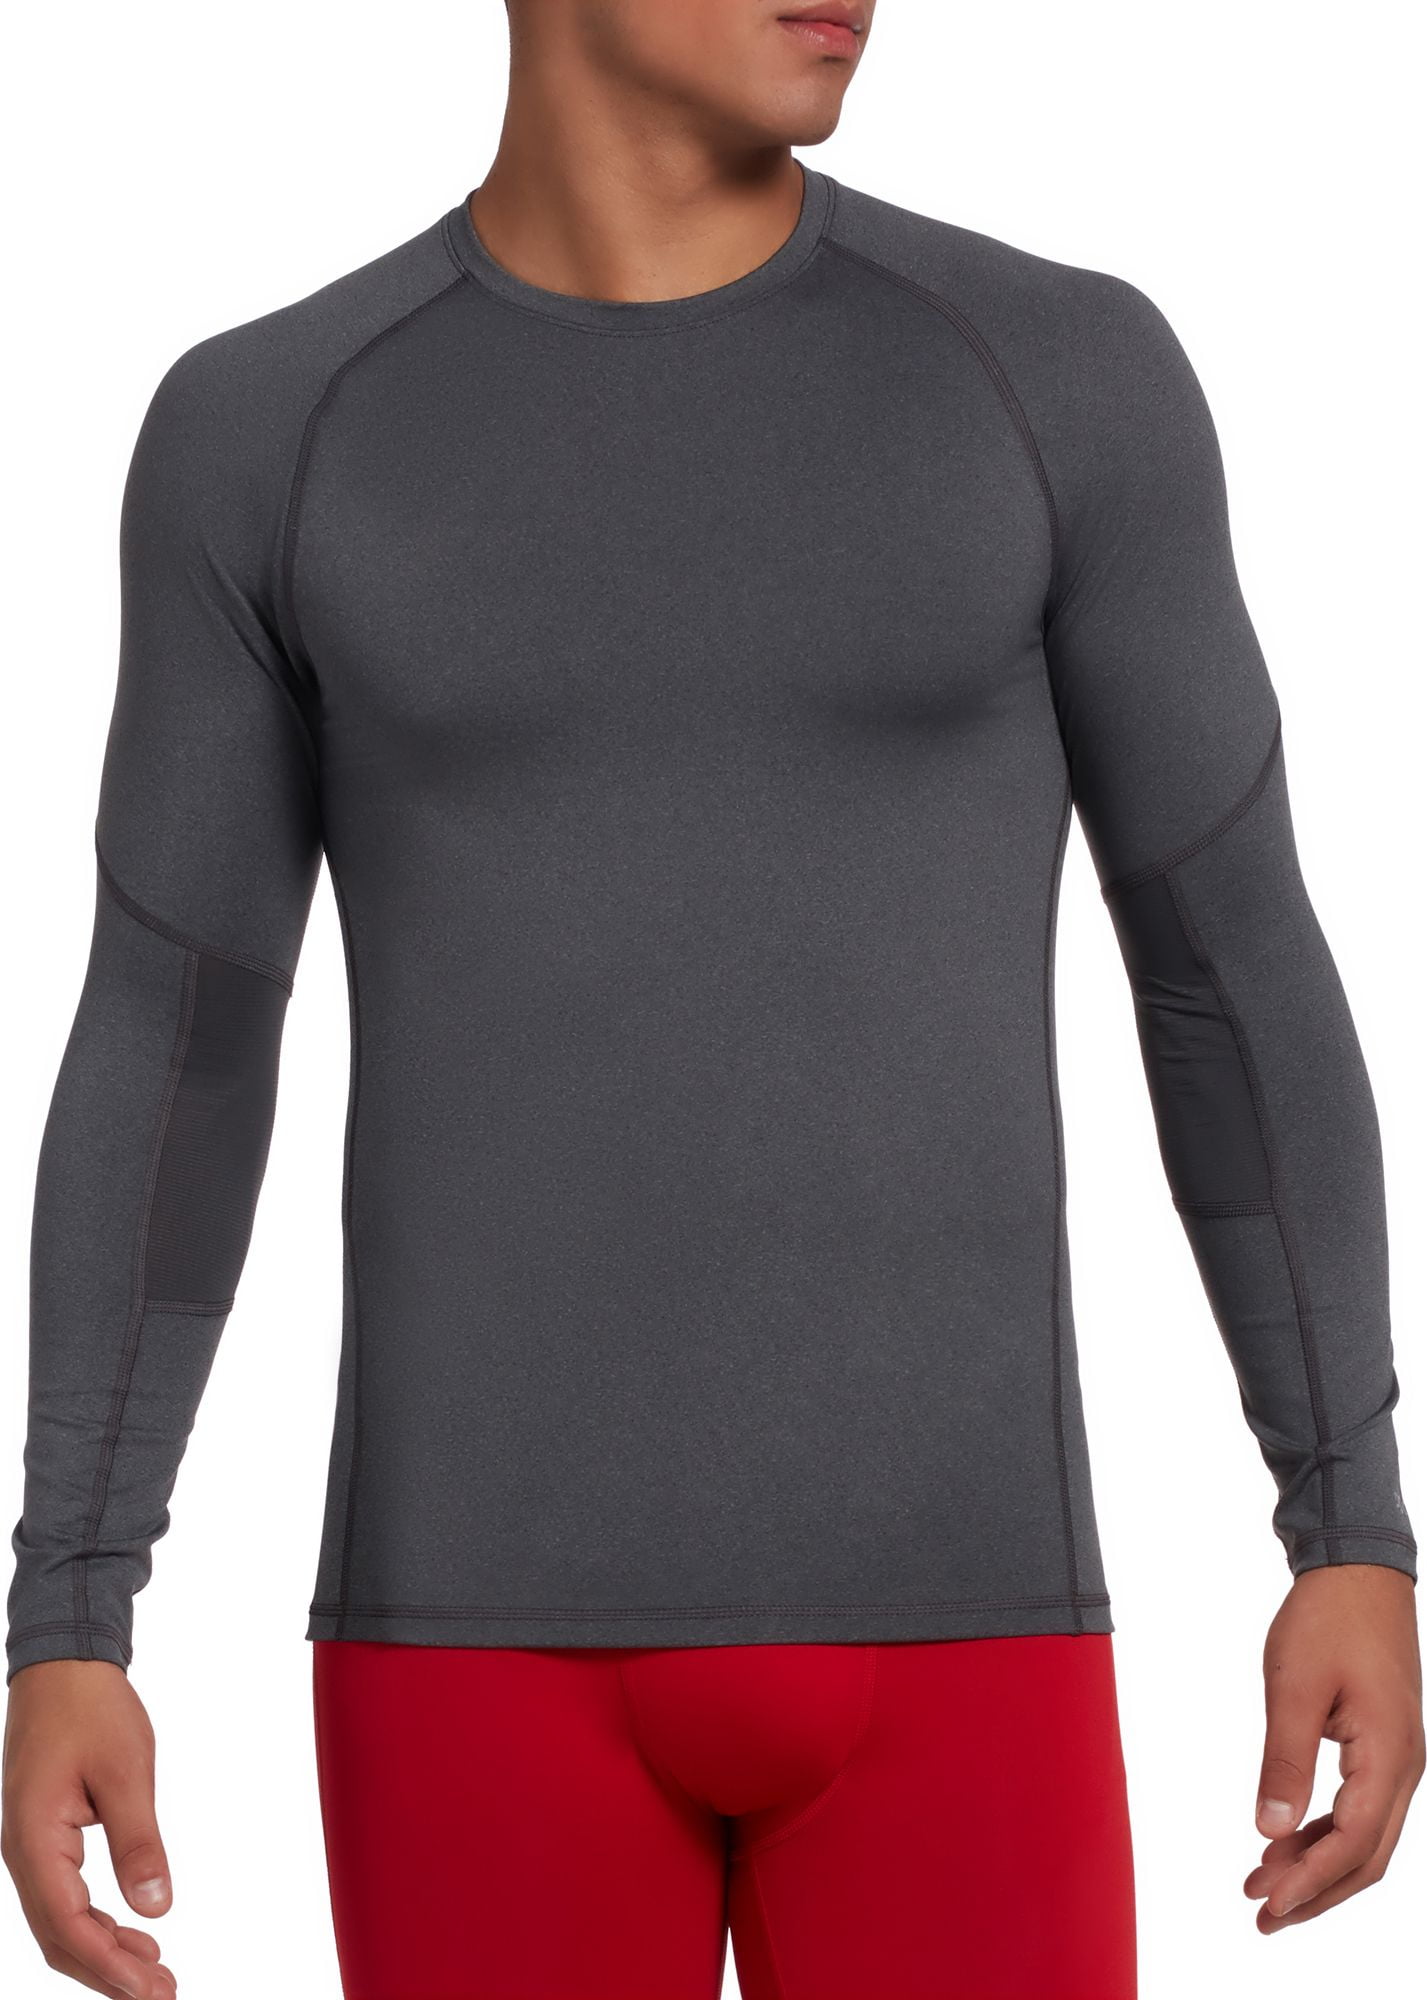 DSG Outerwear - DSG Men's Compression Crew Long Sleeve Shirt - Walmart ...